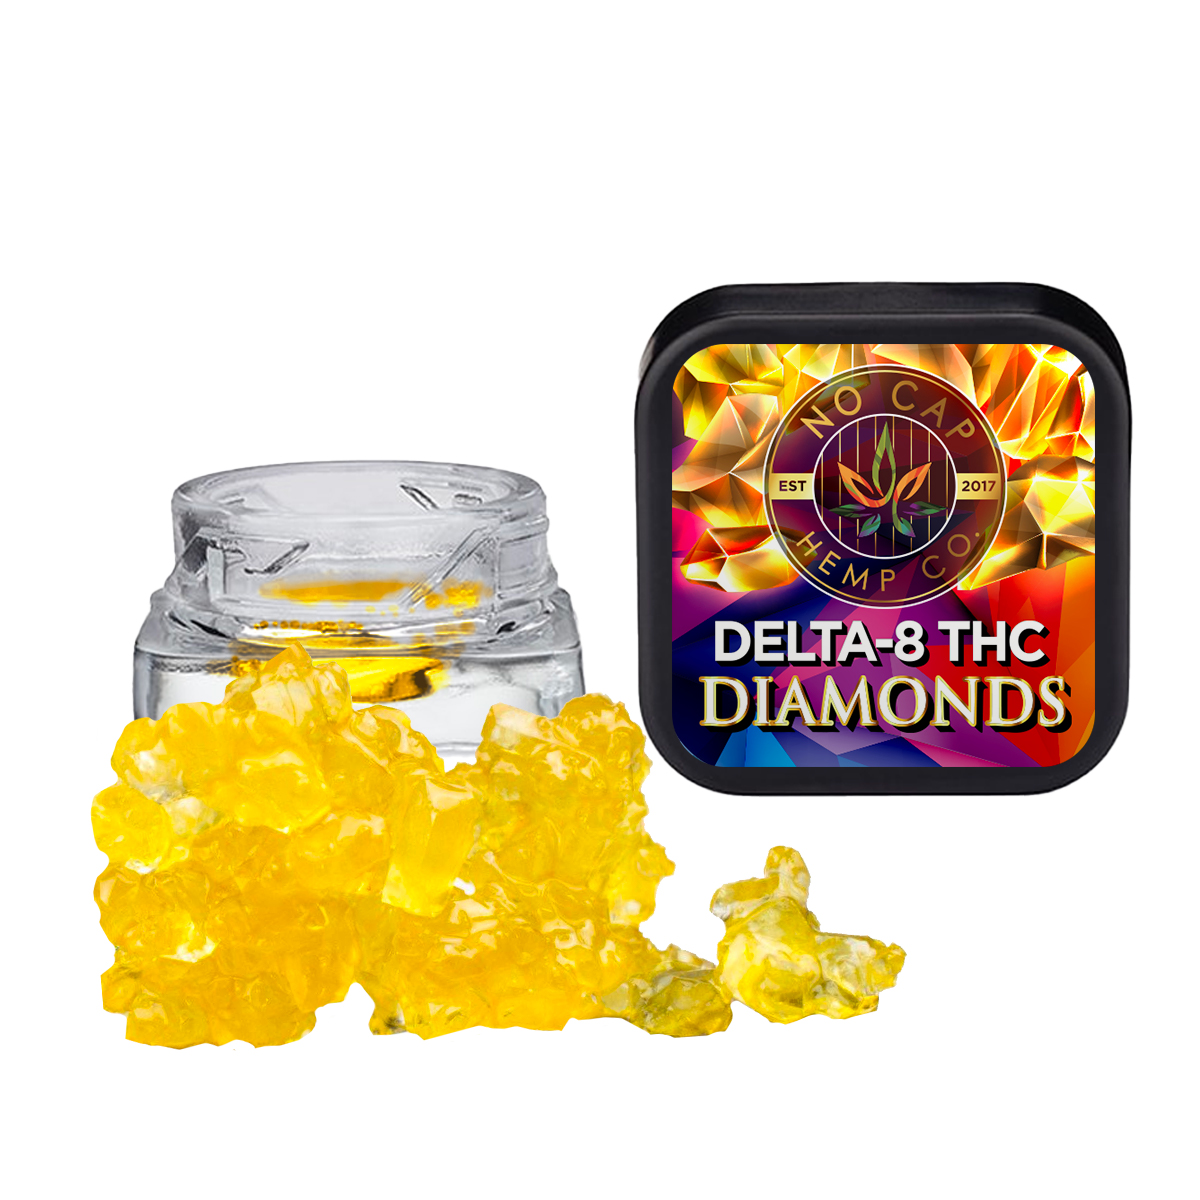 No-Cap-Hemp-Co-Delta-8-THC-Diamonds.jpg